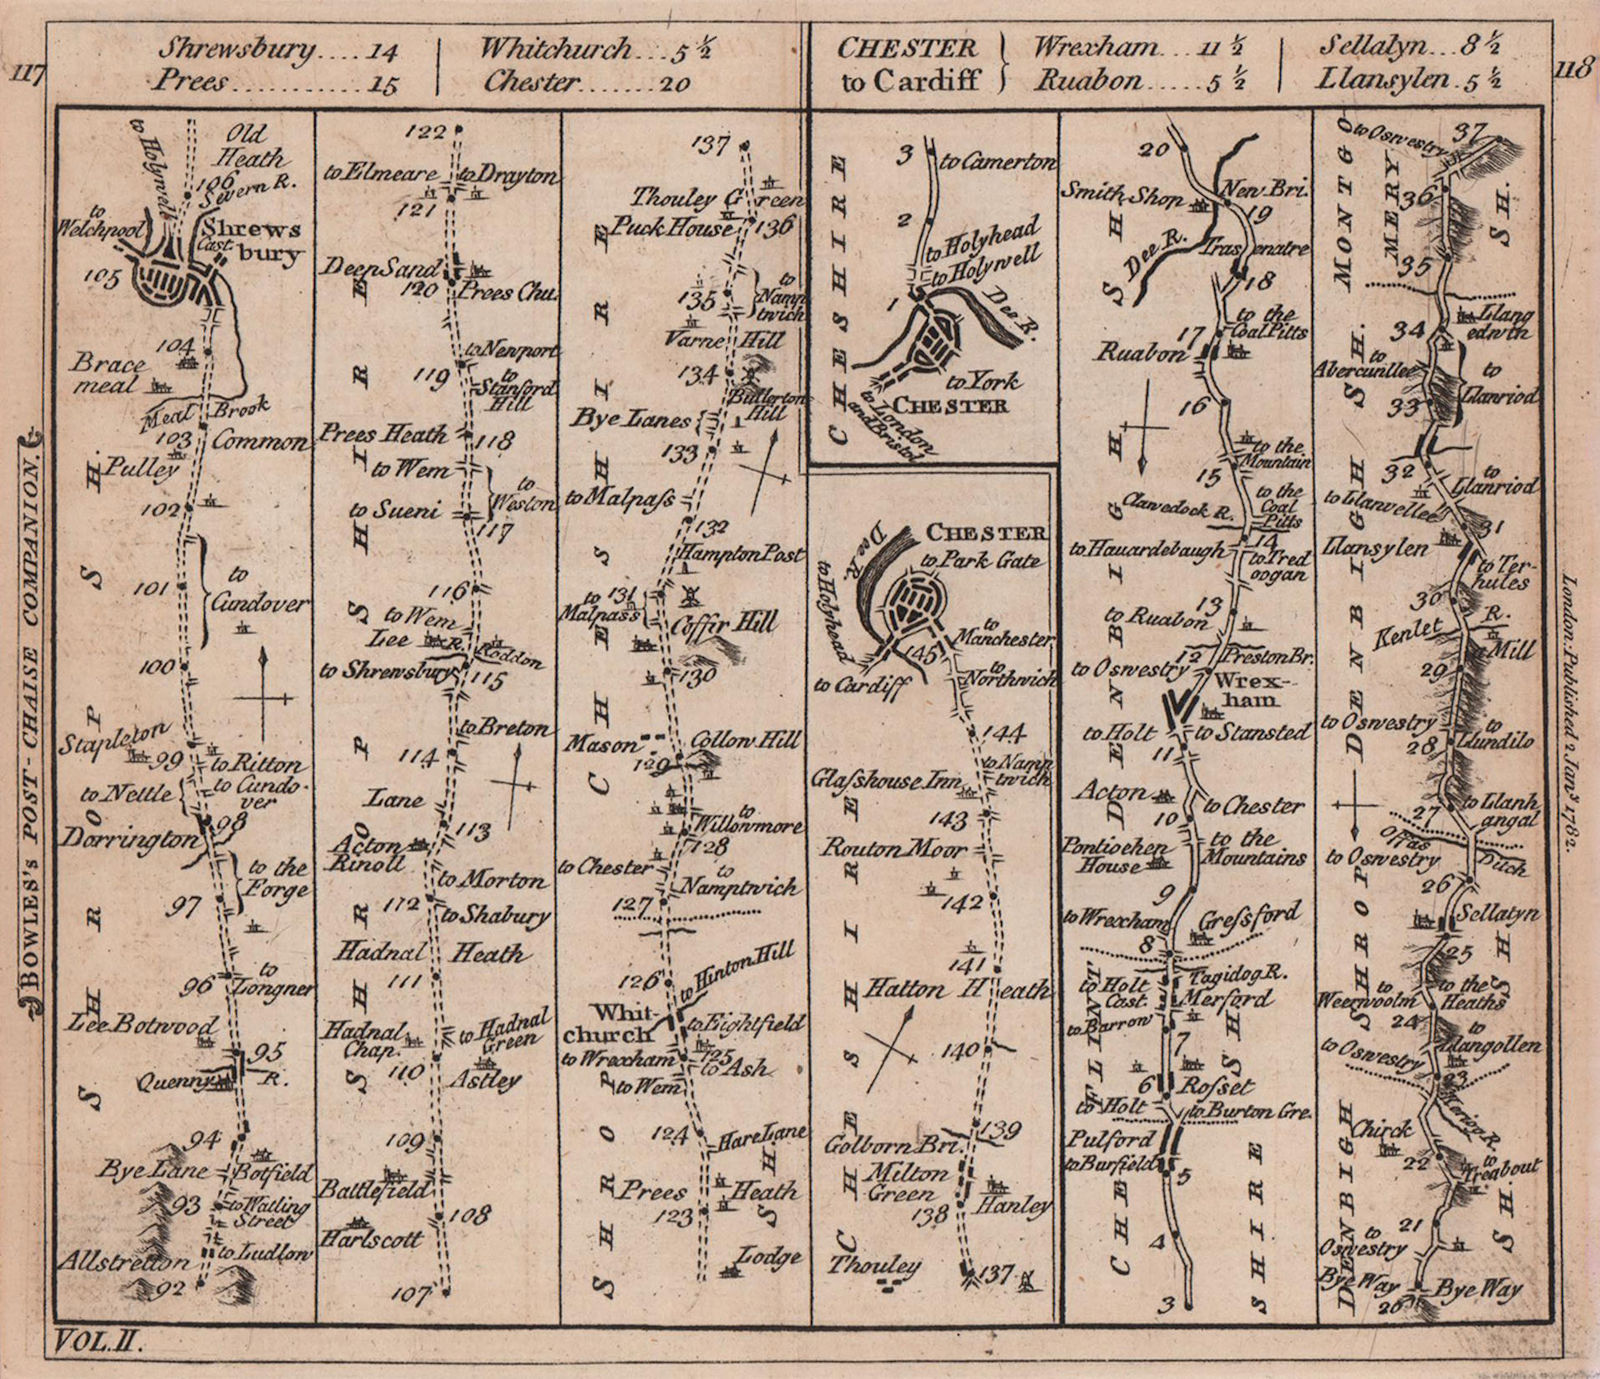 Associate Product Shrewsbury-Chester-Wrexham-Sellattyn-Llansilin road strip map. BOWLES 1782